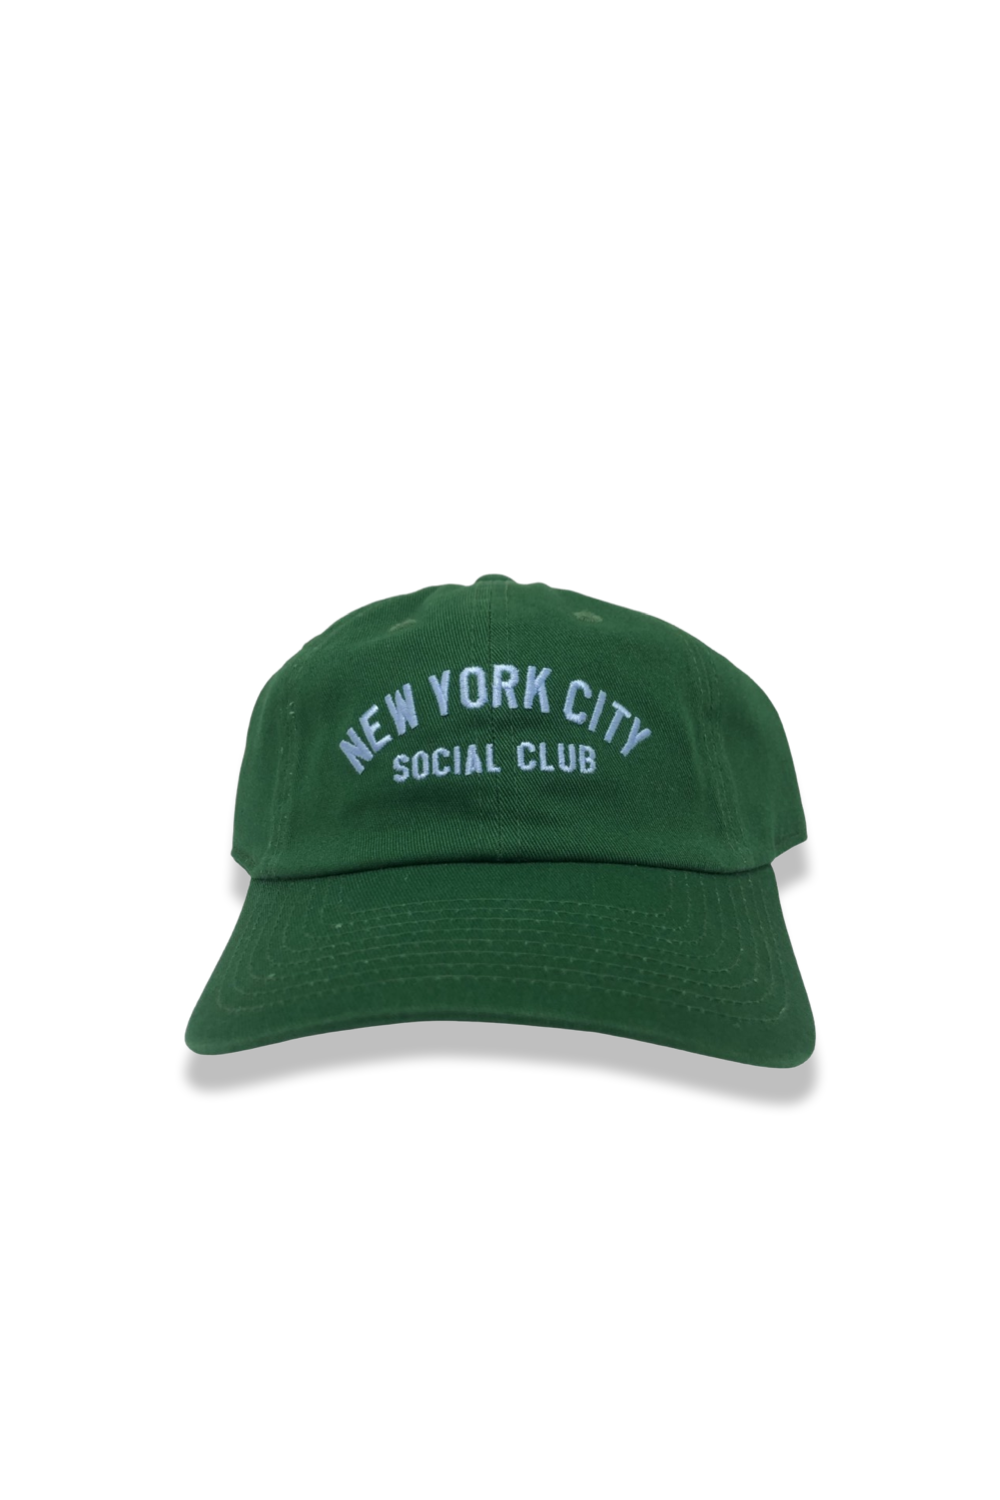 New York City Social Club Ball Park Cap Emerald